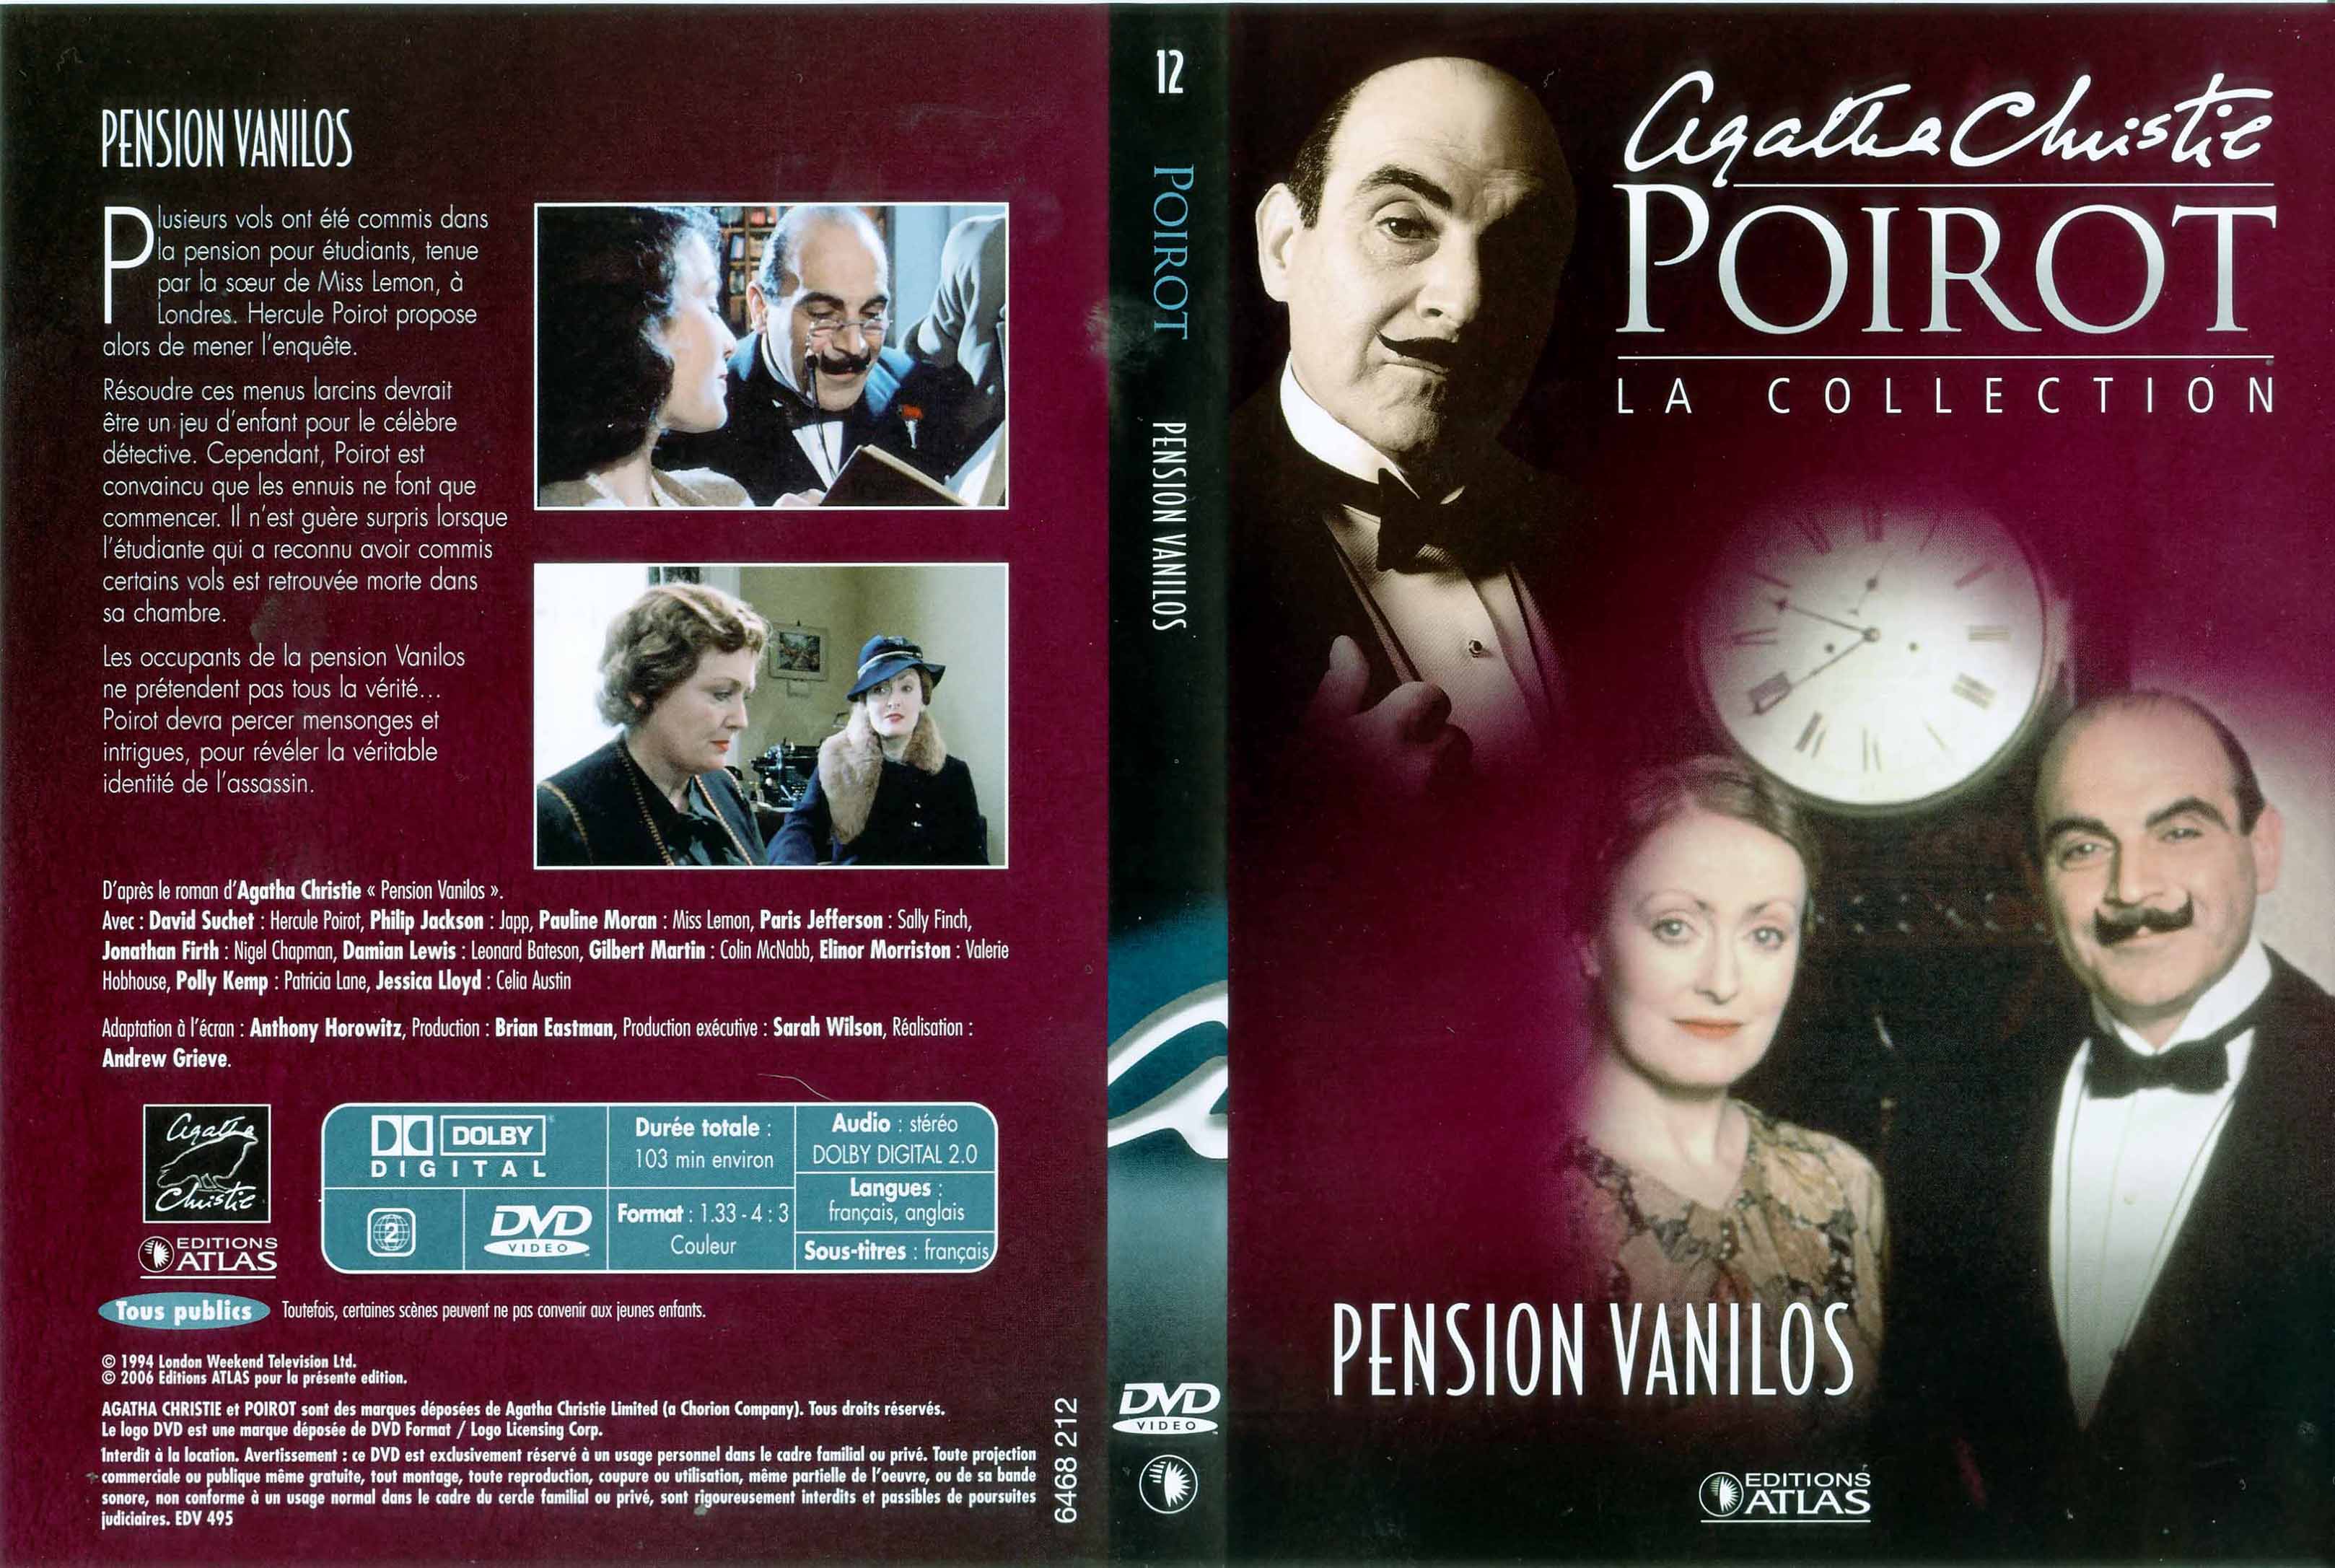 Jaquette DVD Hercule Poirot vol 12